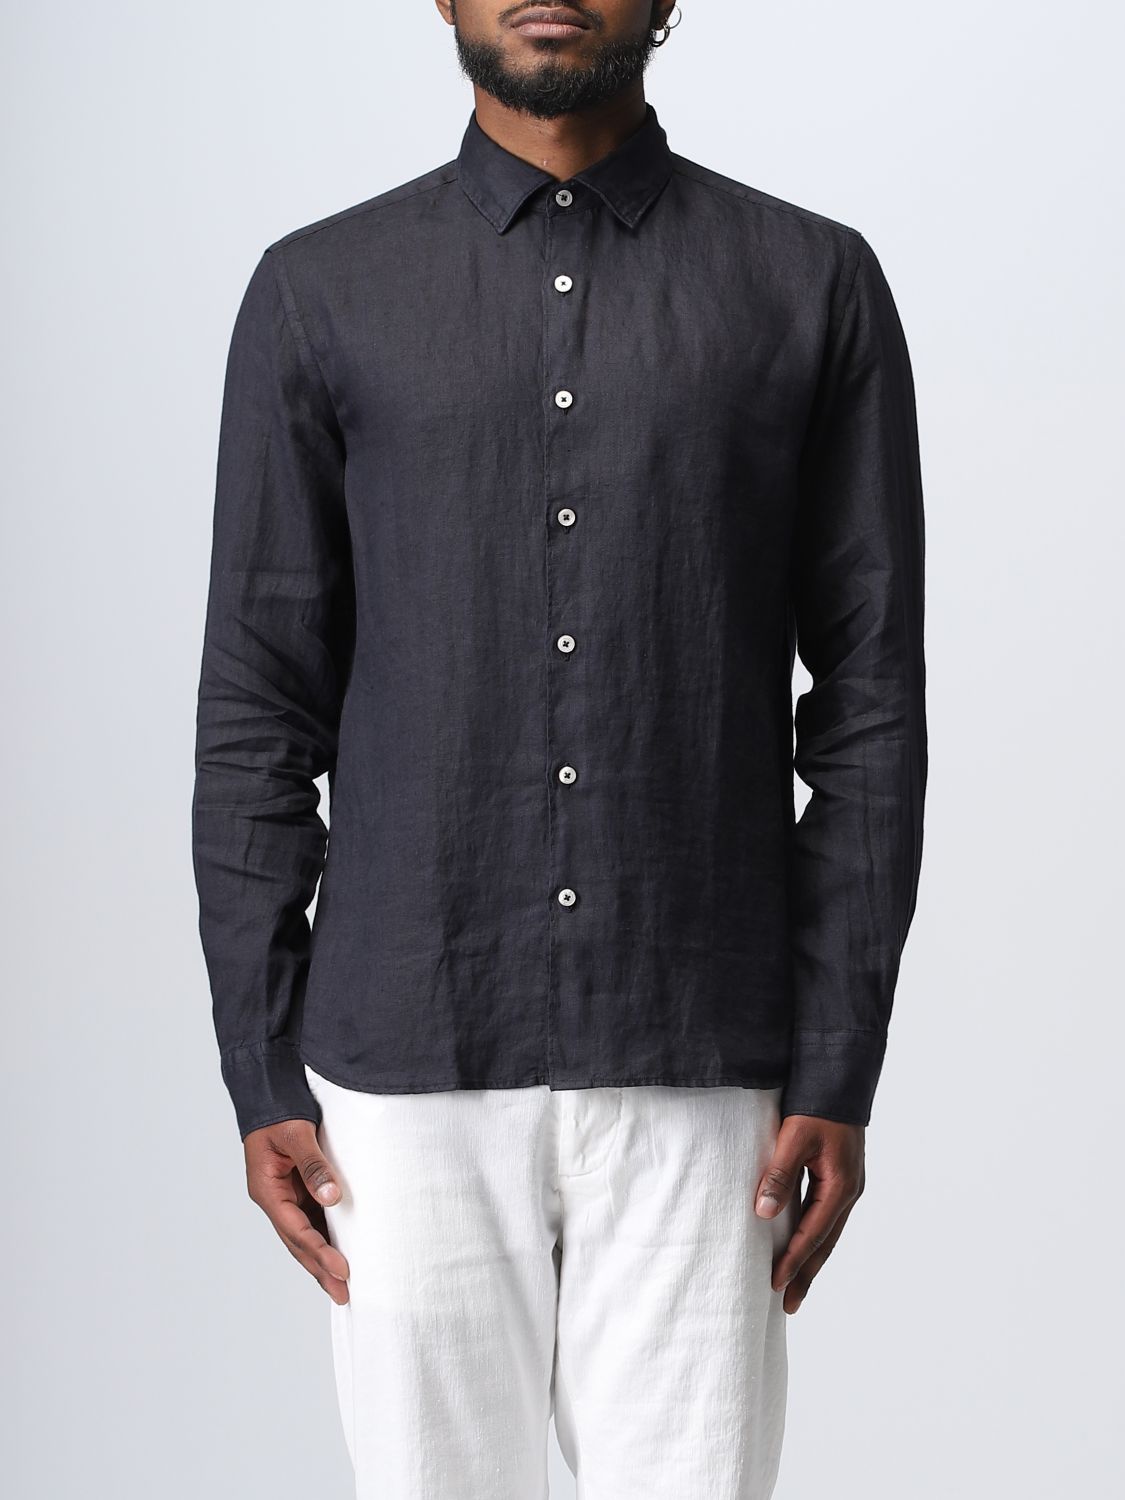 ALTEA: shirt for man - Navy | Altea shirt 2354001 online on GIGLIO.COM